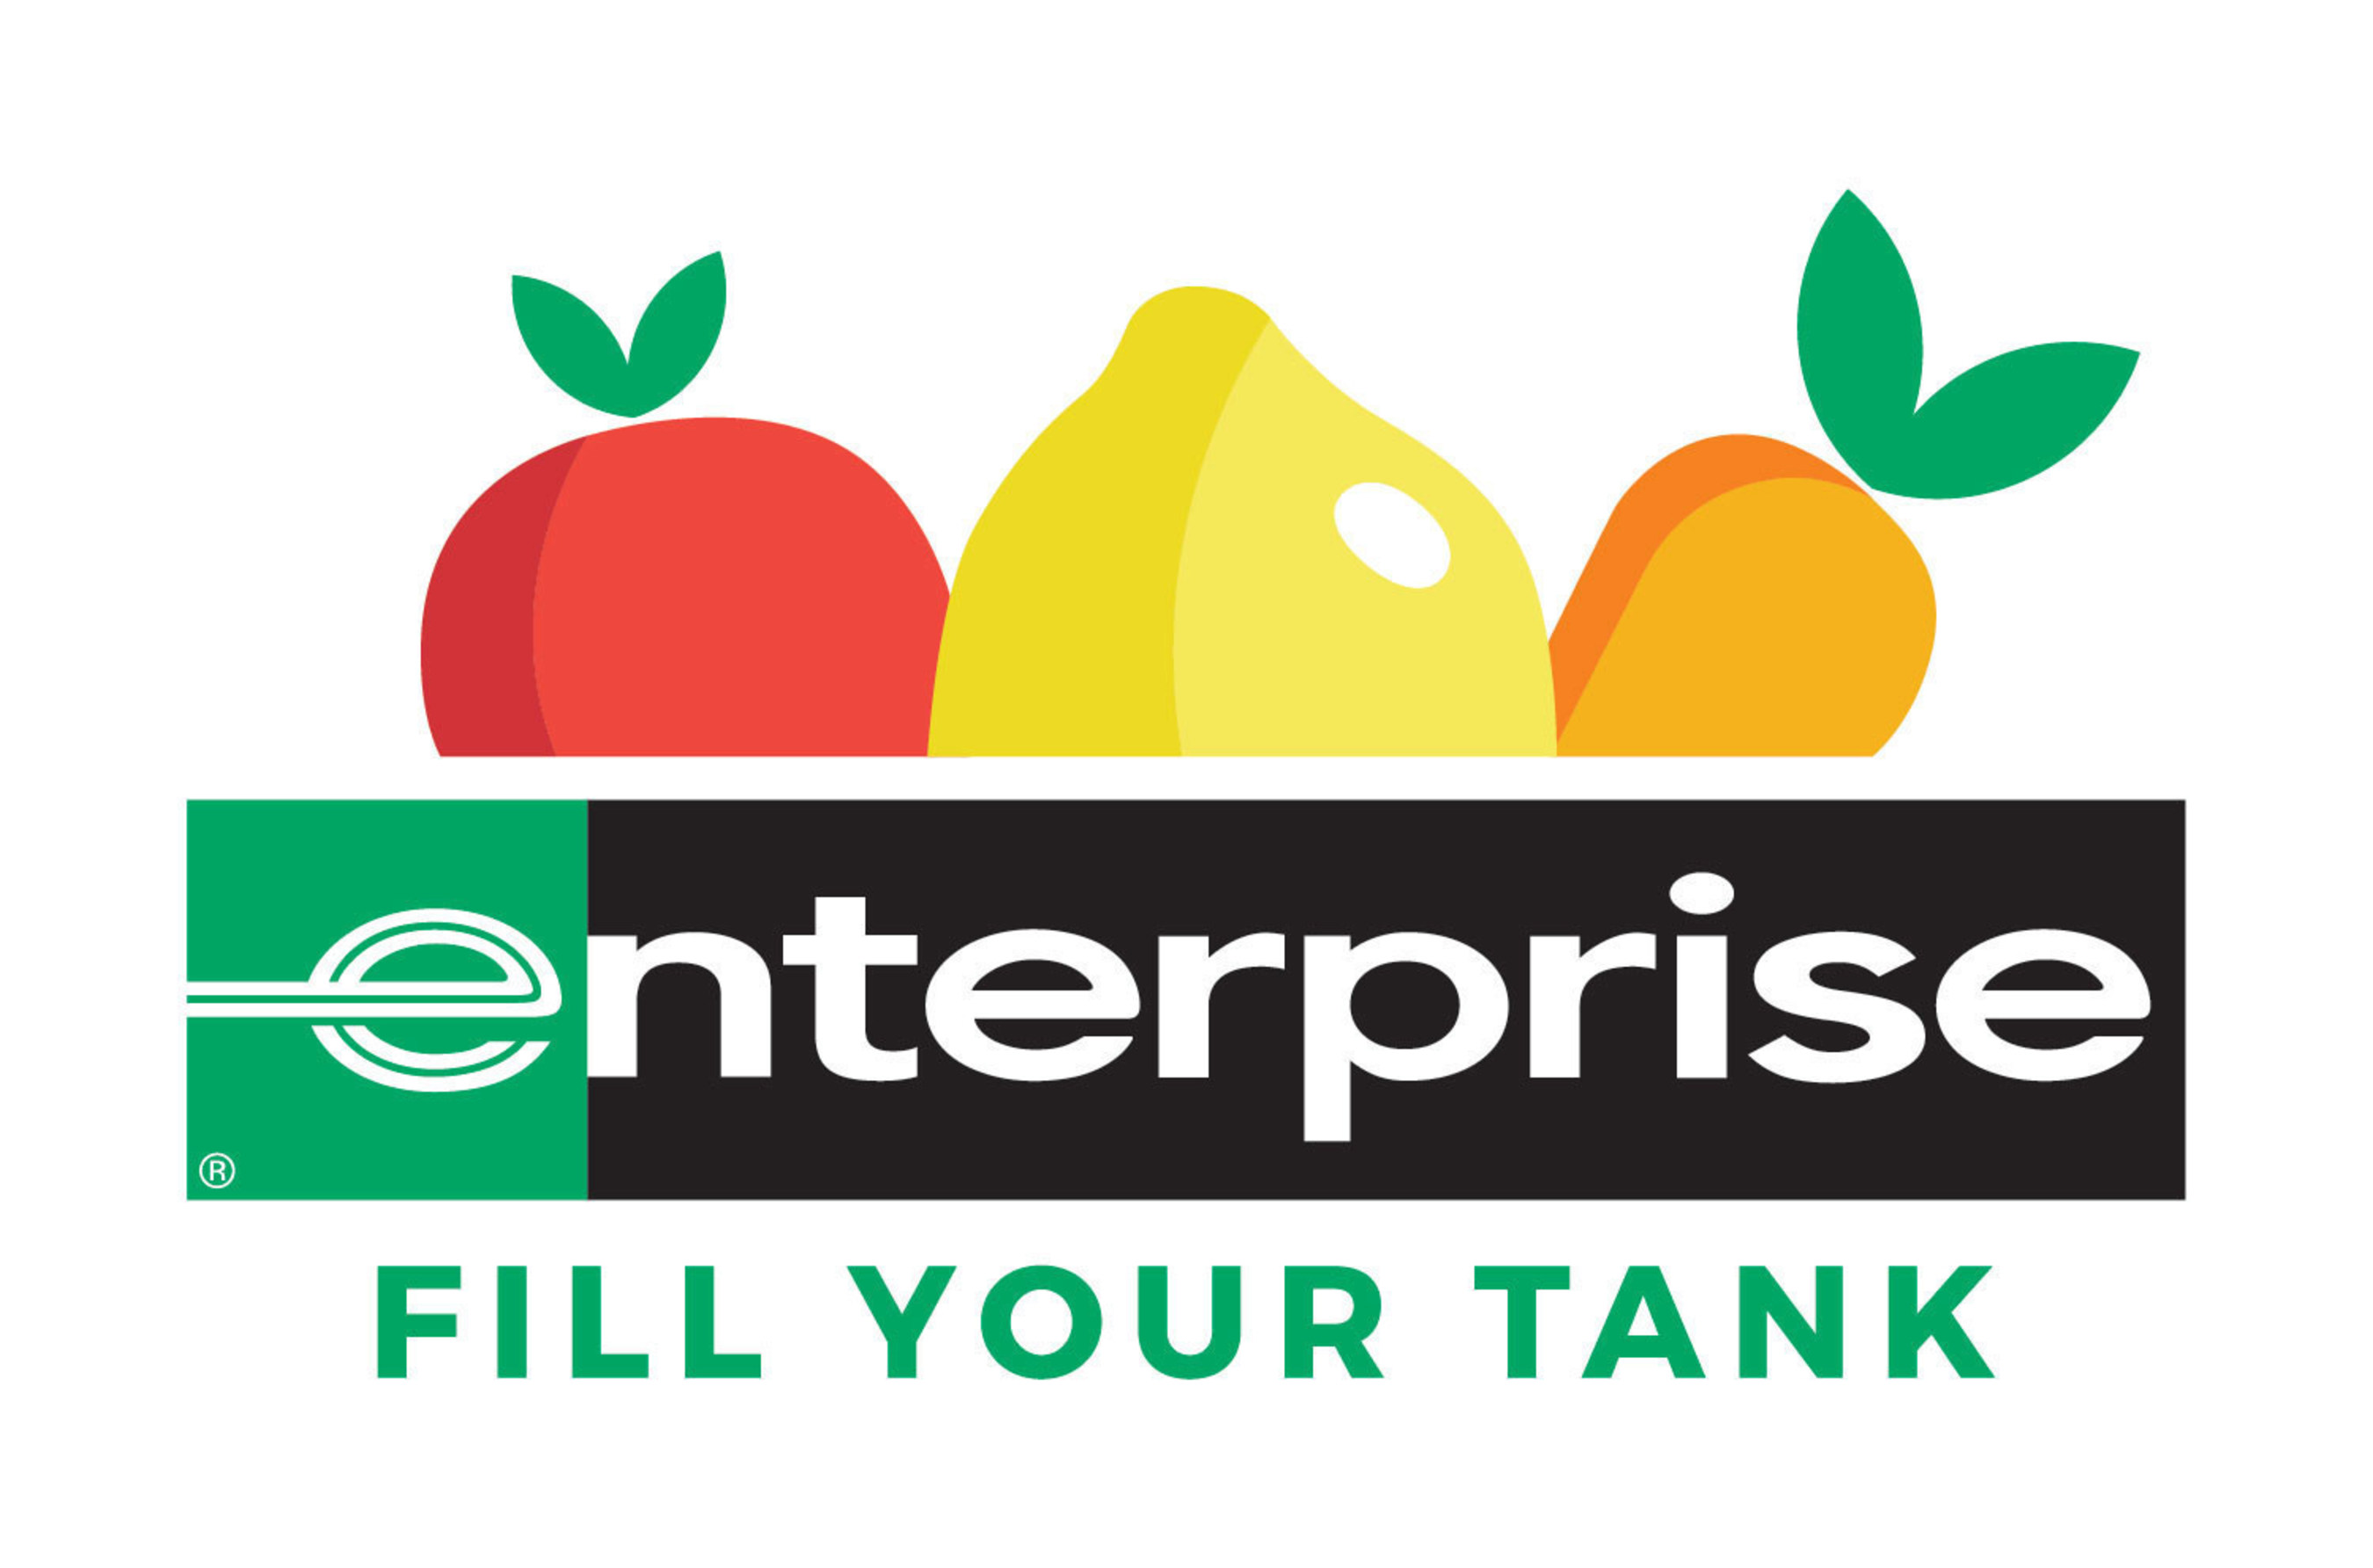 Enterprise Fill Your Tank